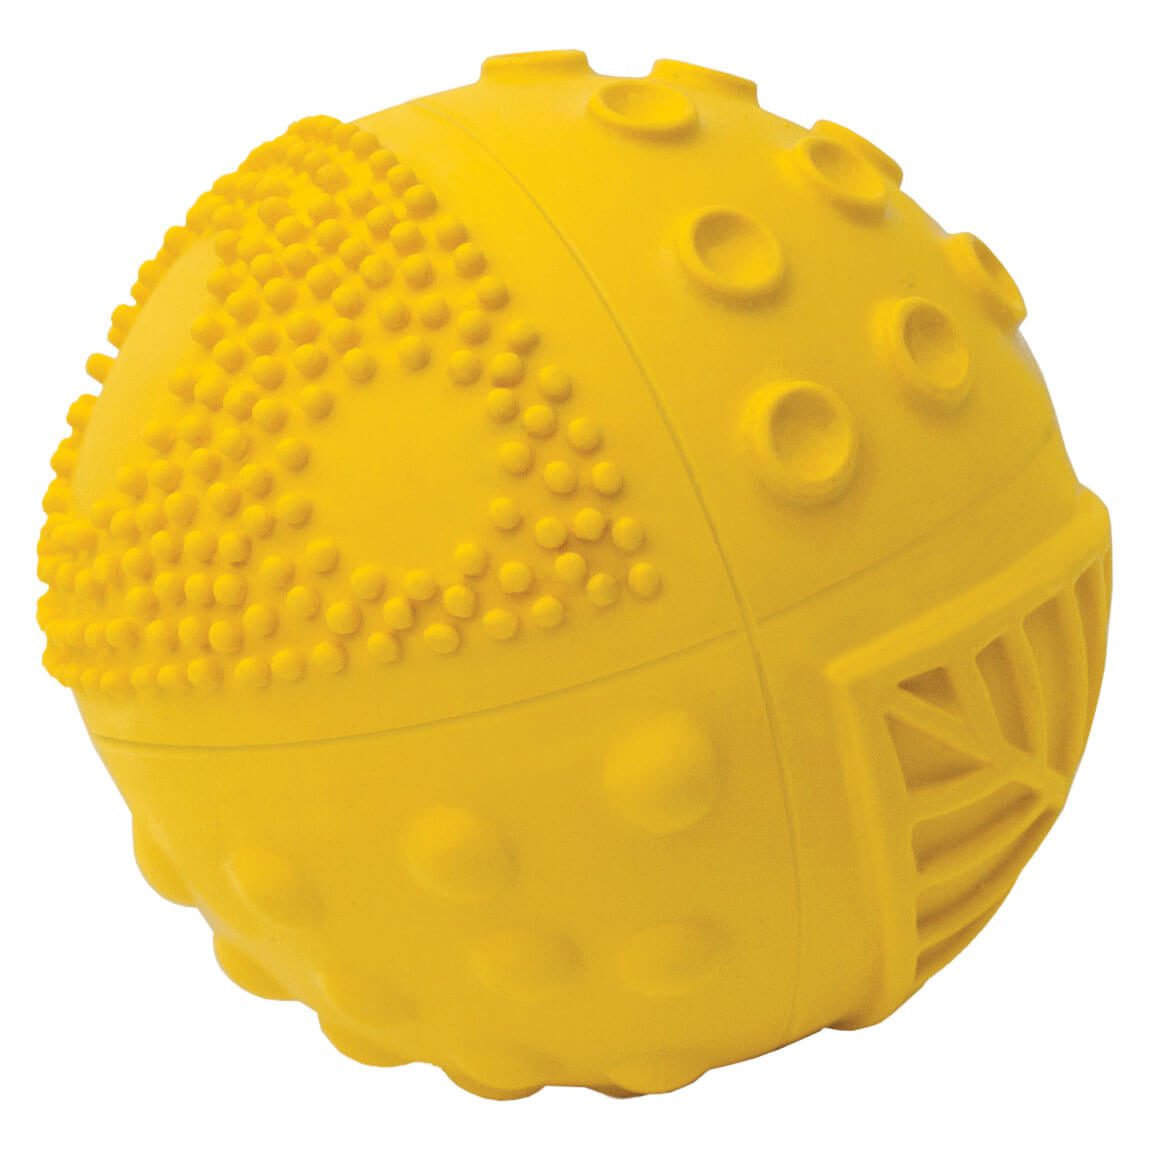 Sunshine Sensory Ball Petit (3") - 100% natural rubber - CaaOcho Collection